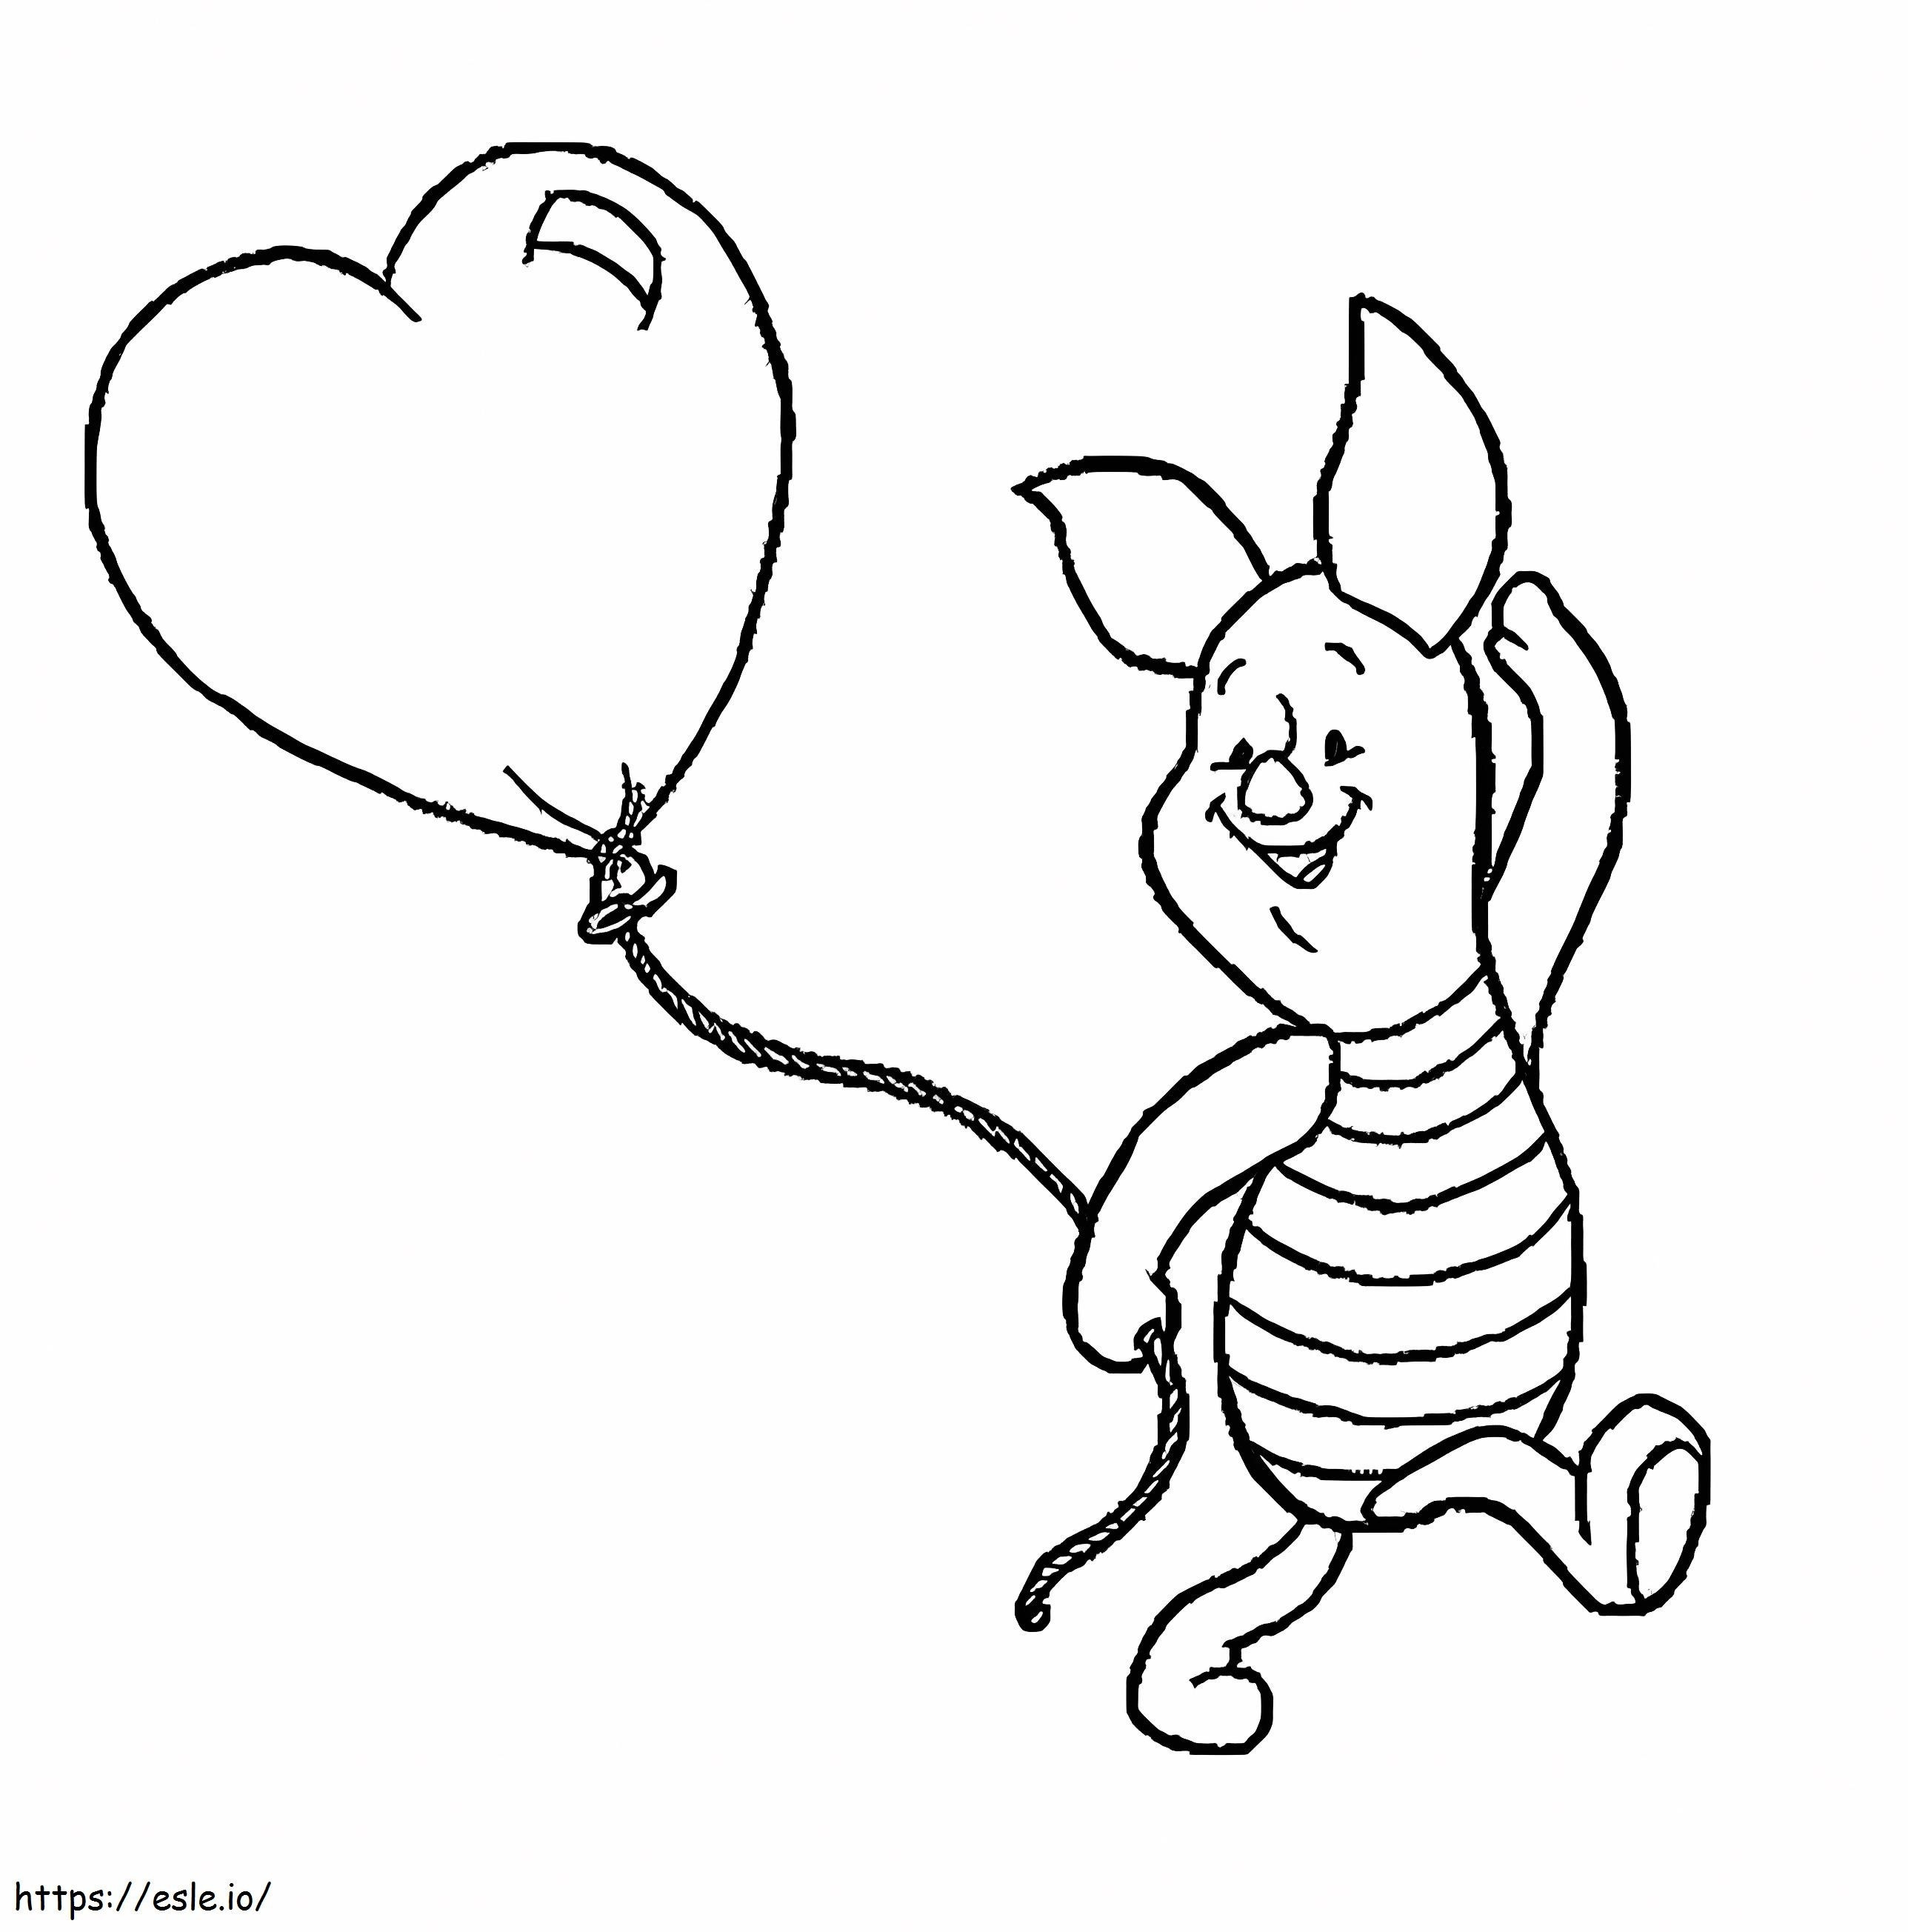 Ferkel mit Herzballon ausmalbilder